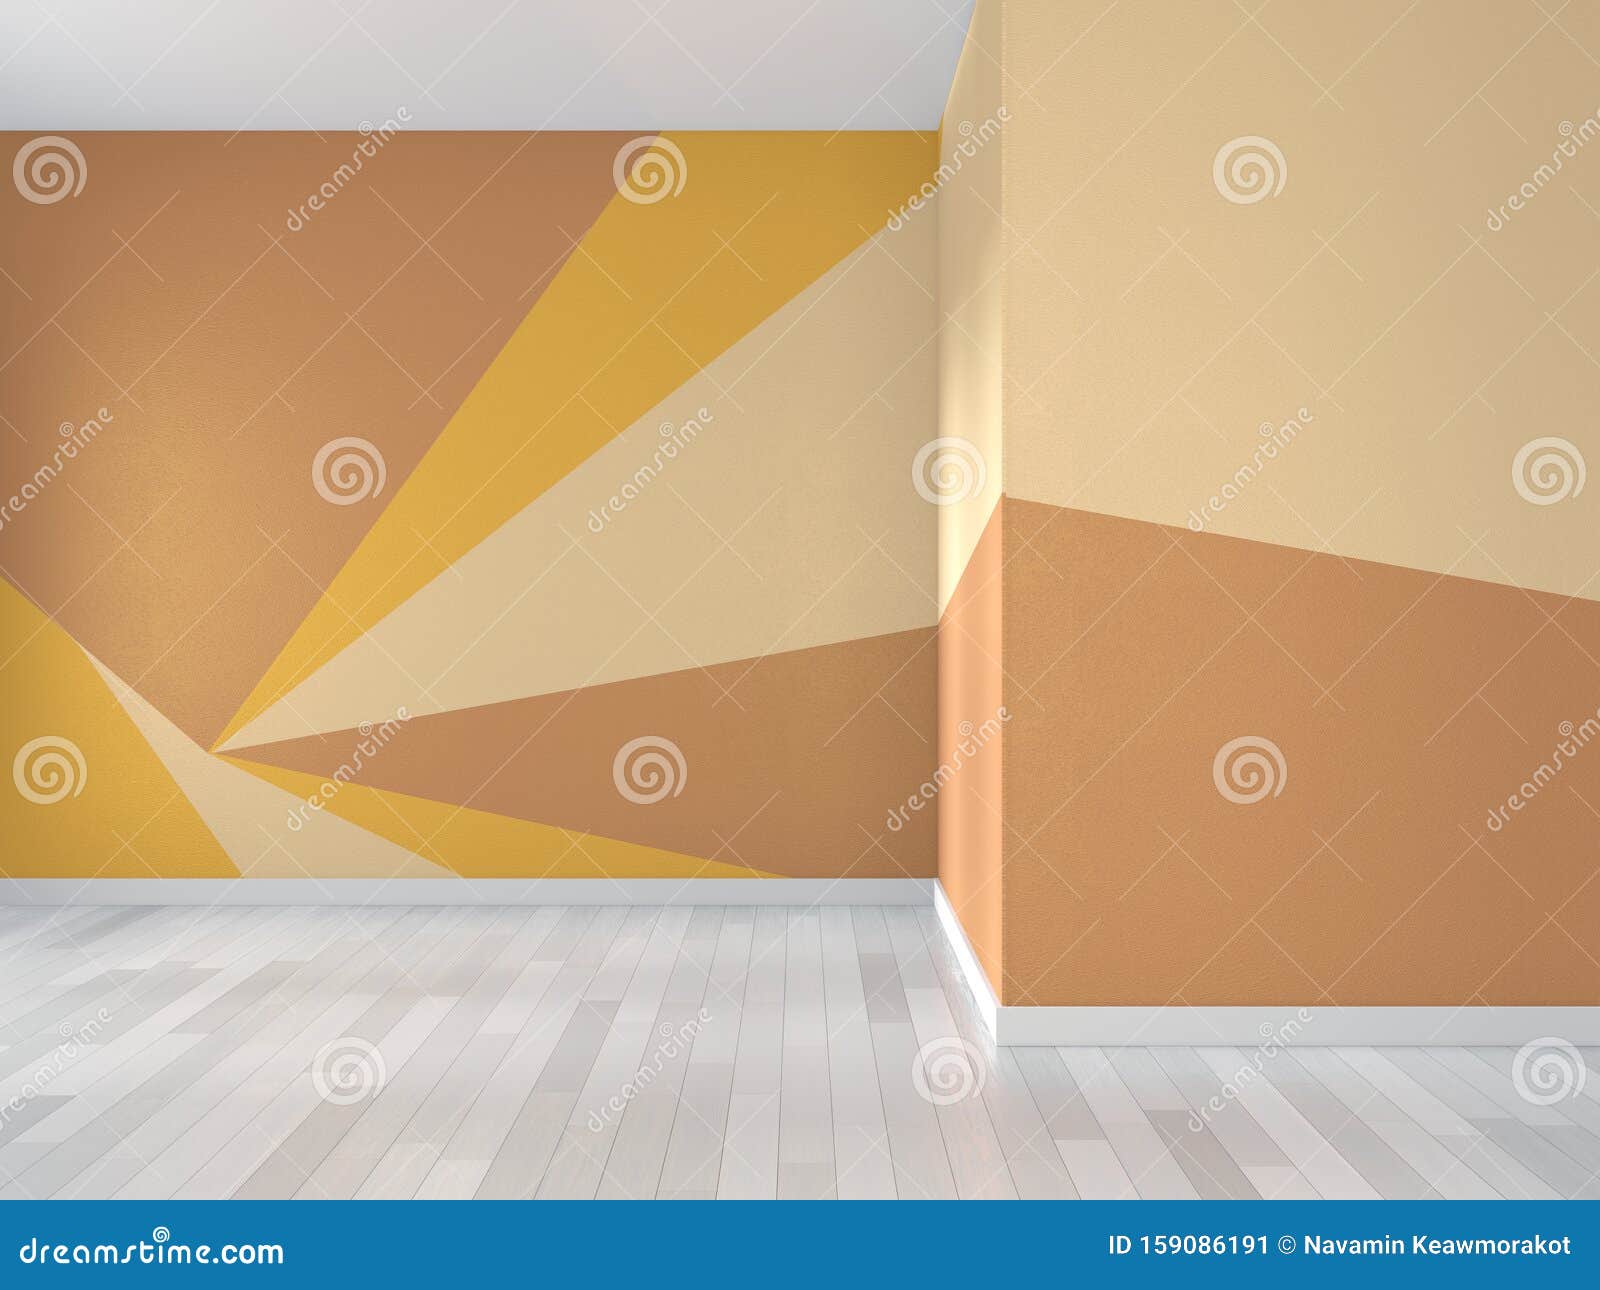 Mock Up Ideas of Yellow and Orange Room Geometric Wall Art Paint ...